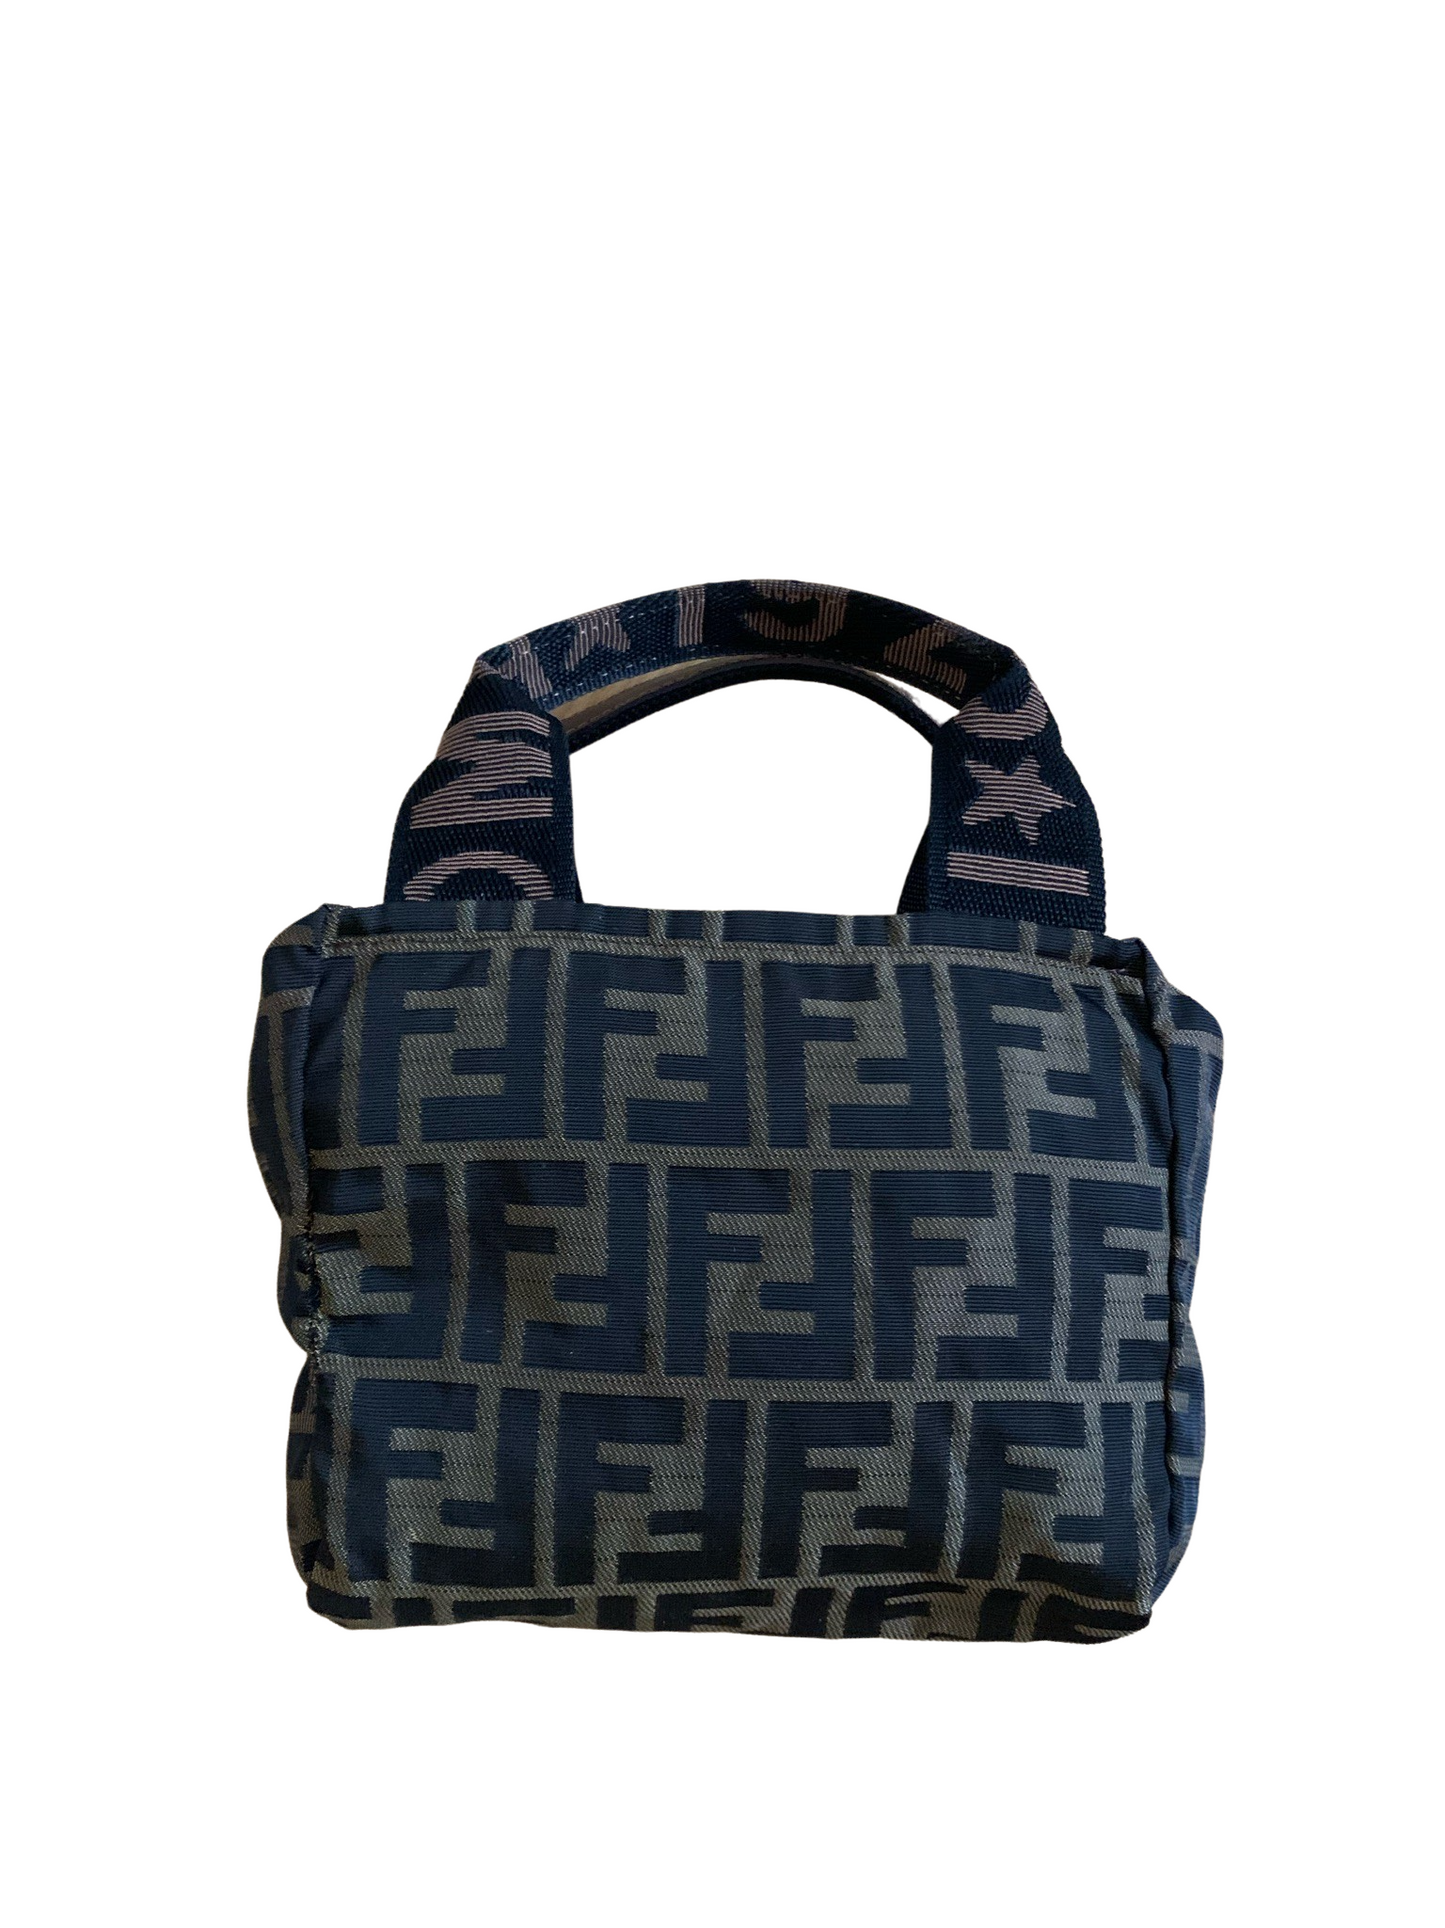 Fendi Zucca Dark Brown Jacquard Handbag